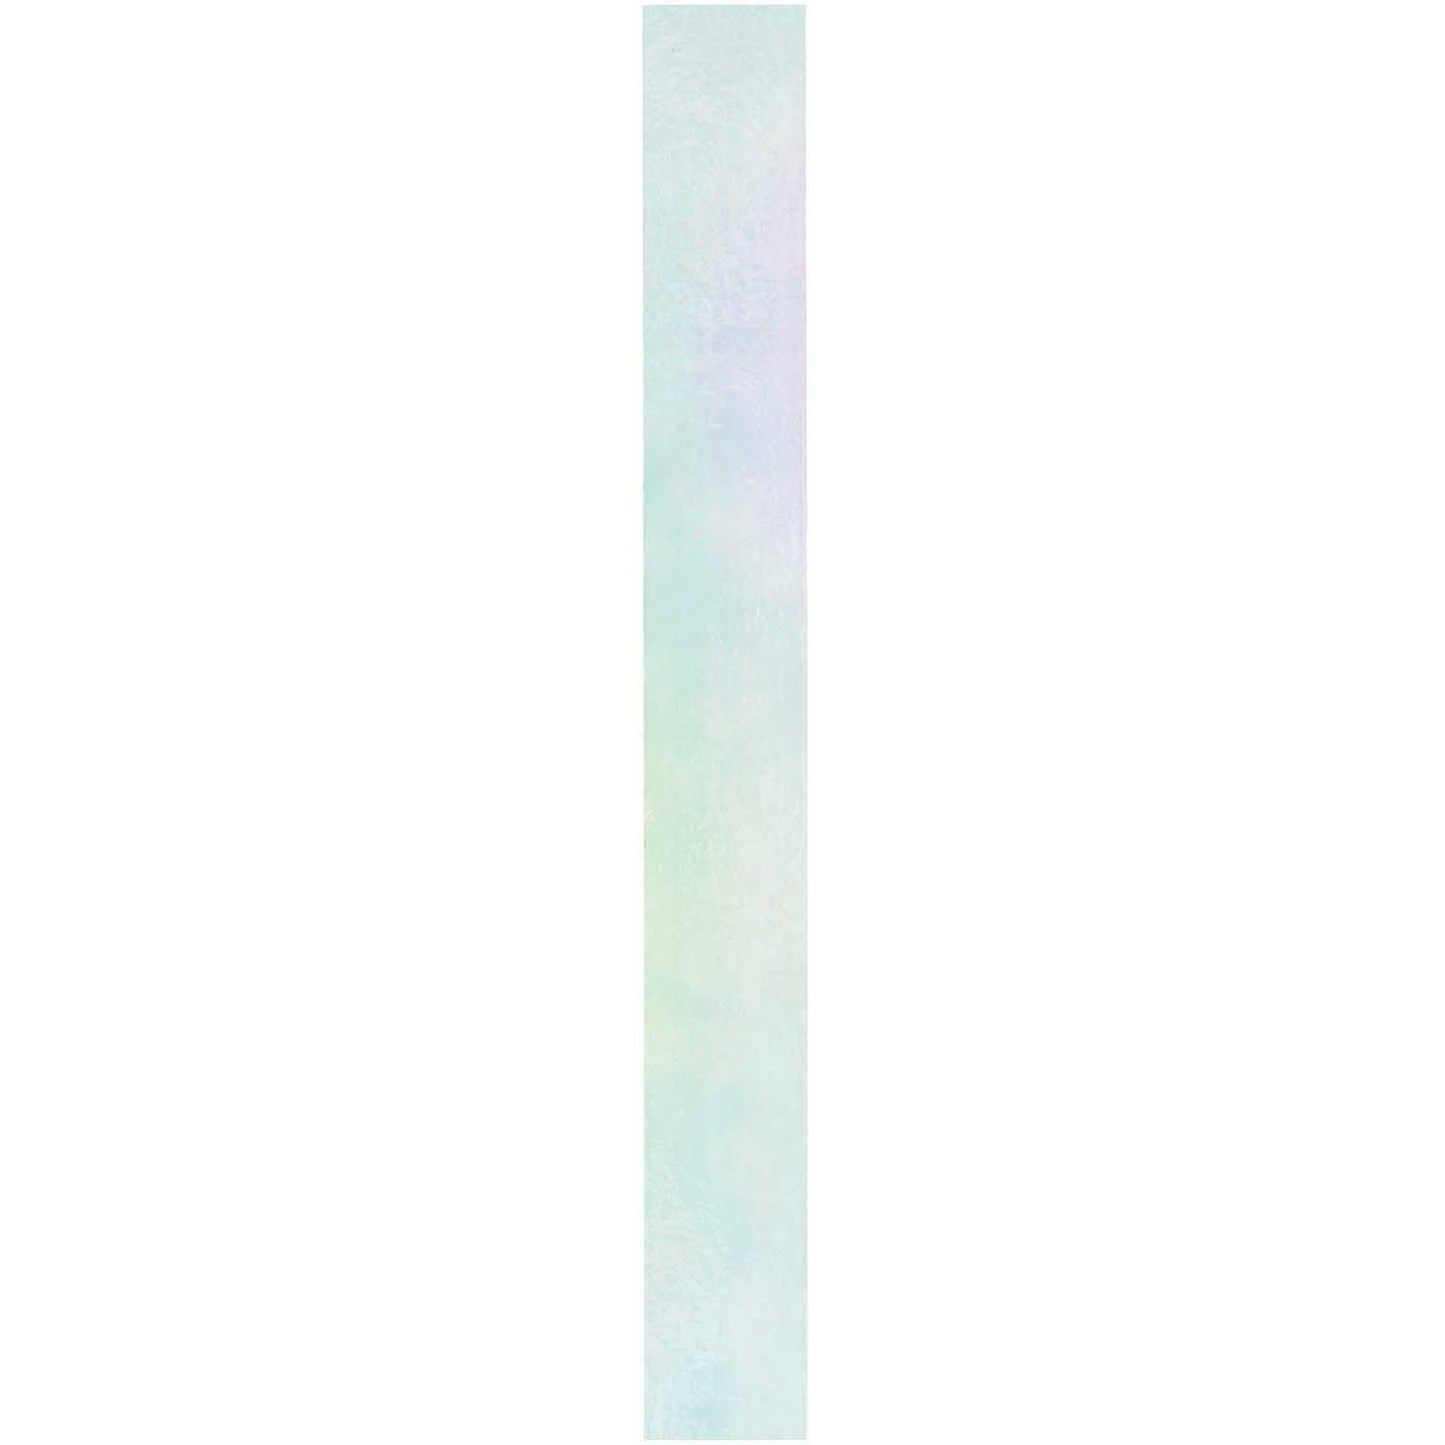 Lilac Iridescent Washi Tape | Shop Washi Tape UK | Rico Rico Design